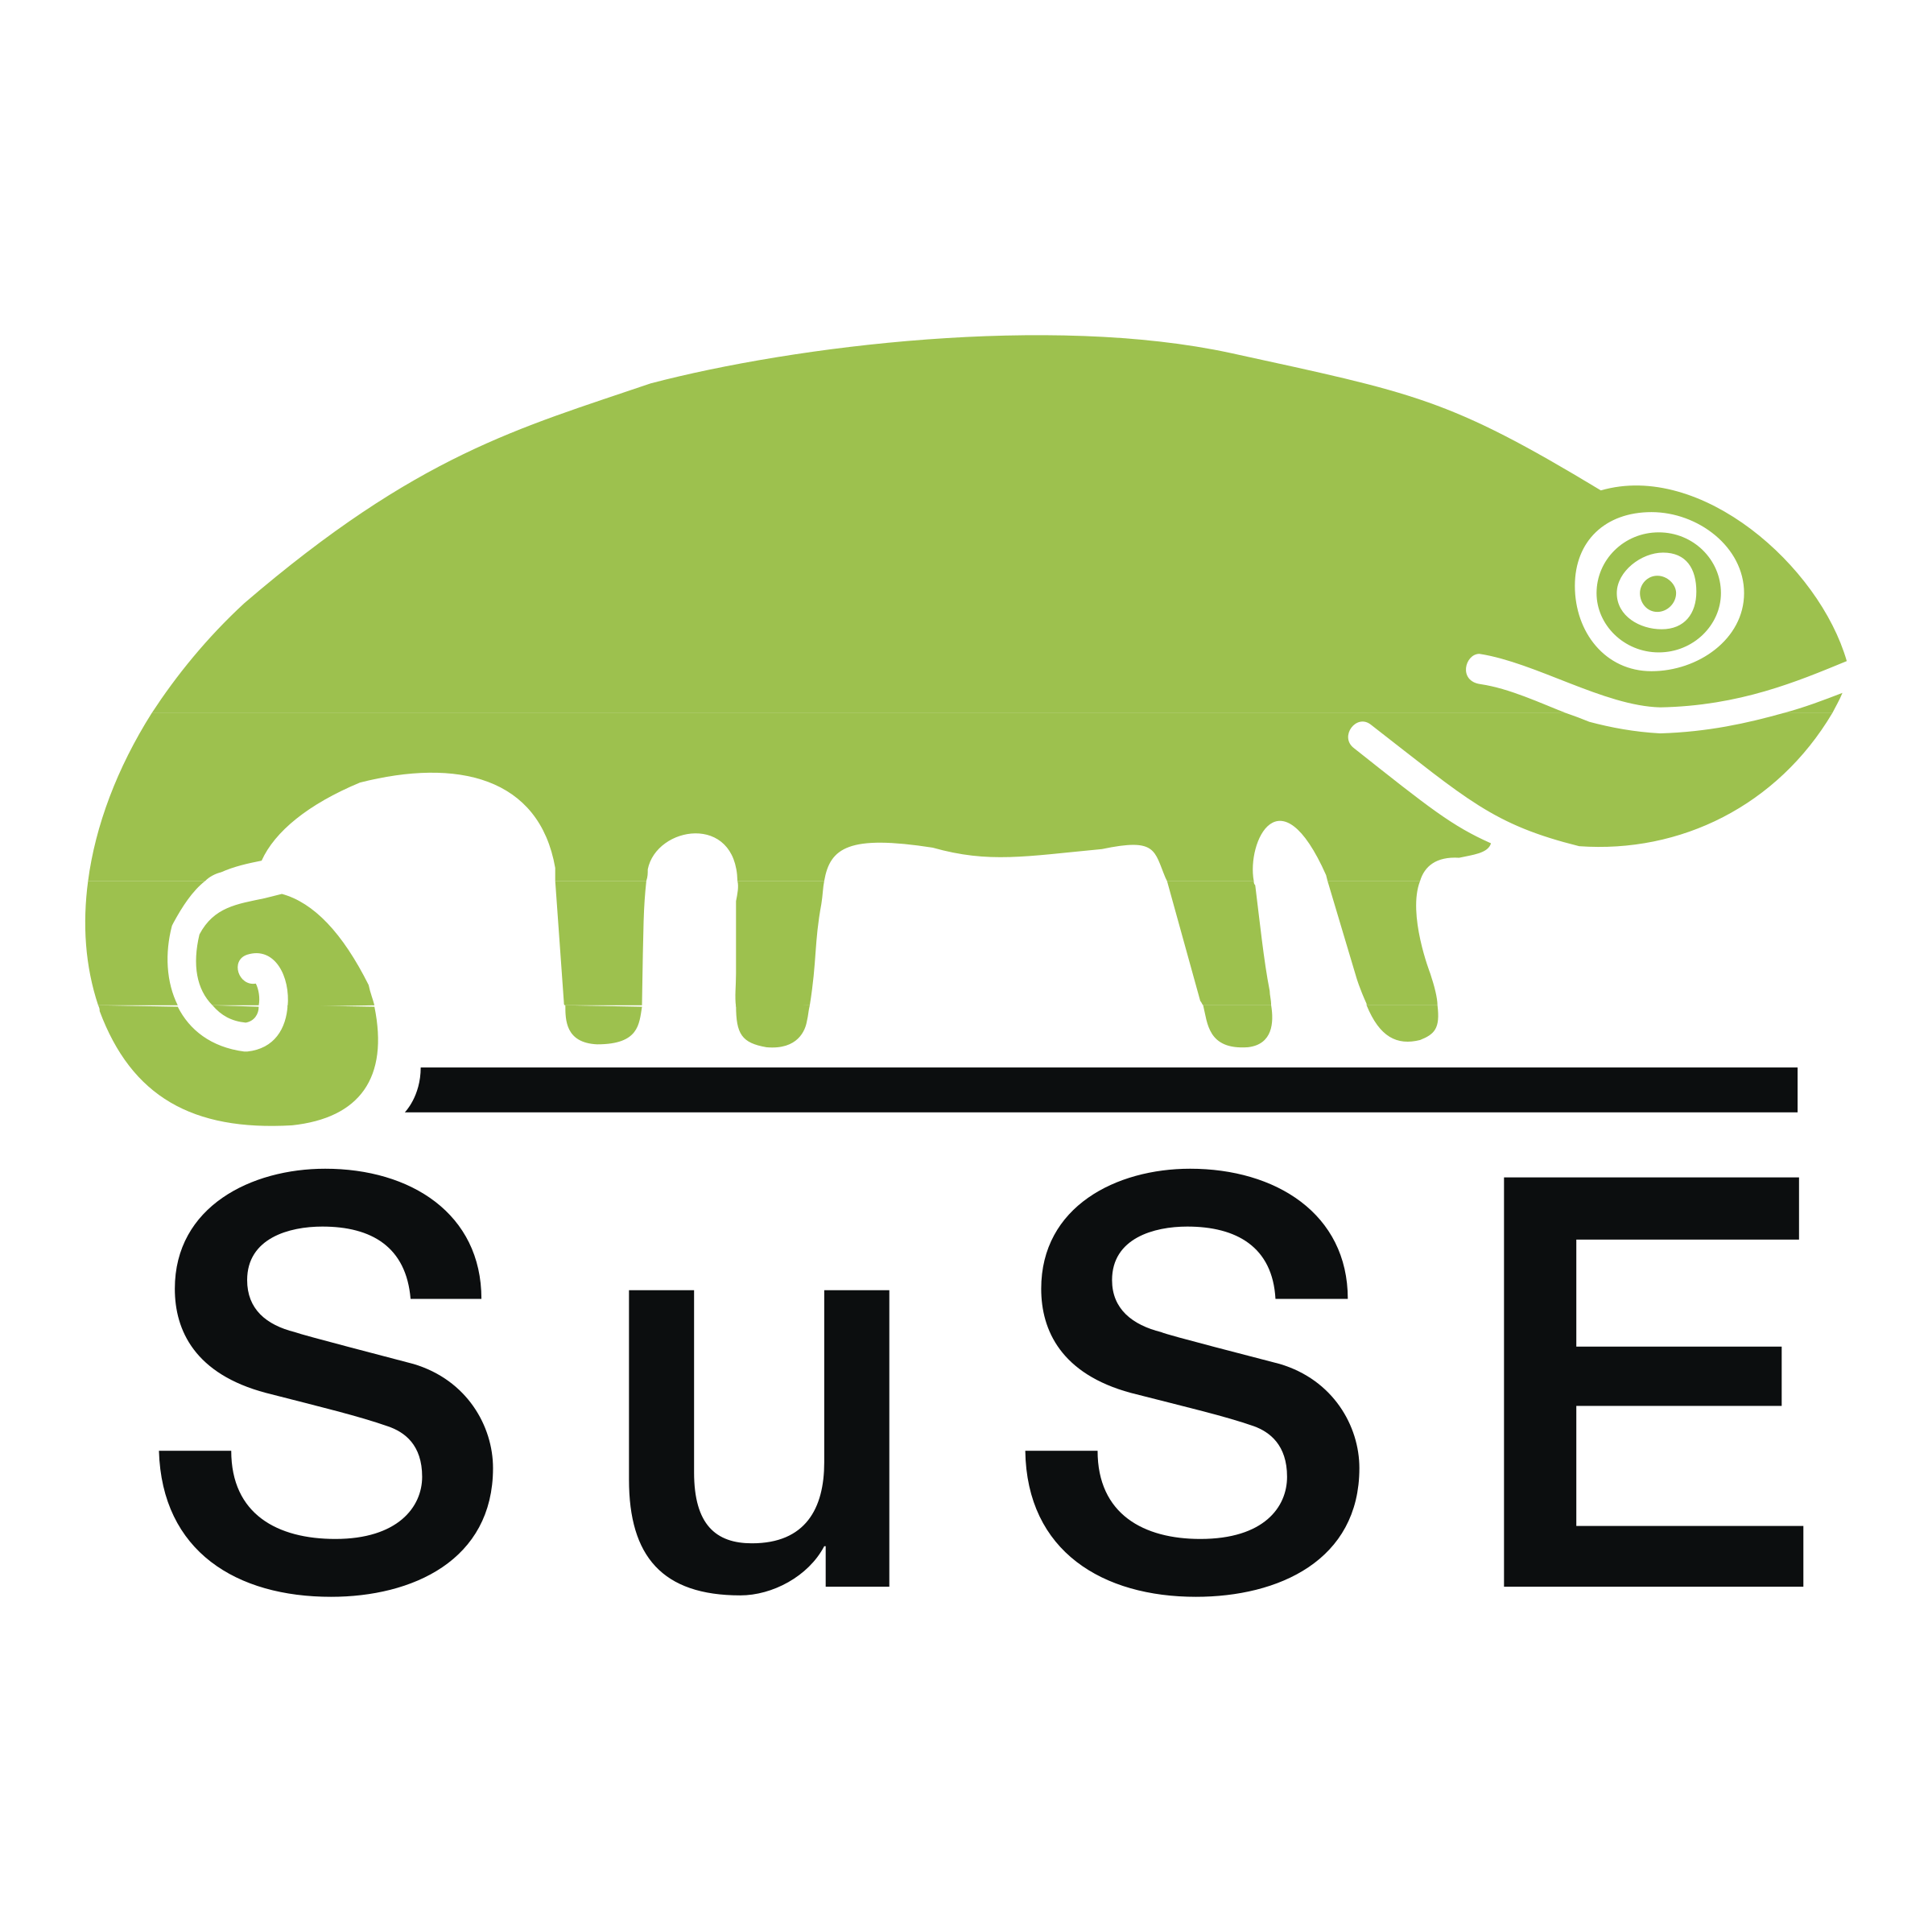 suse-logo-png-transparent